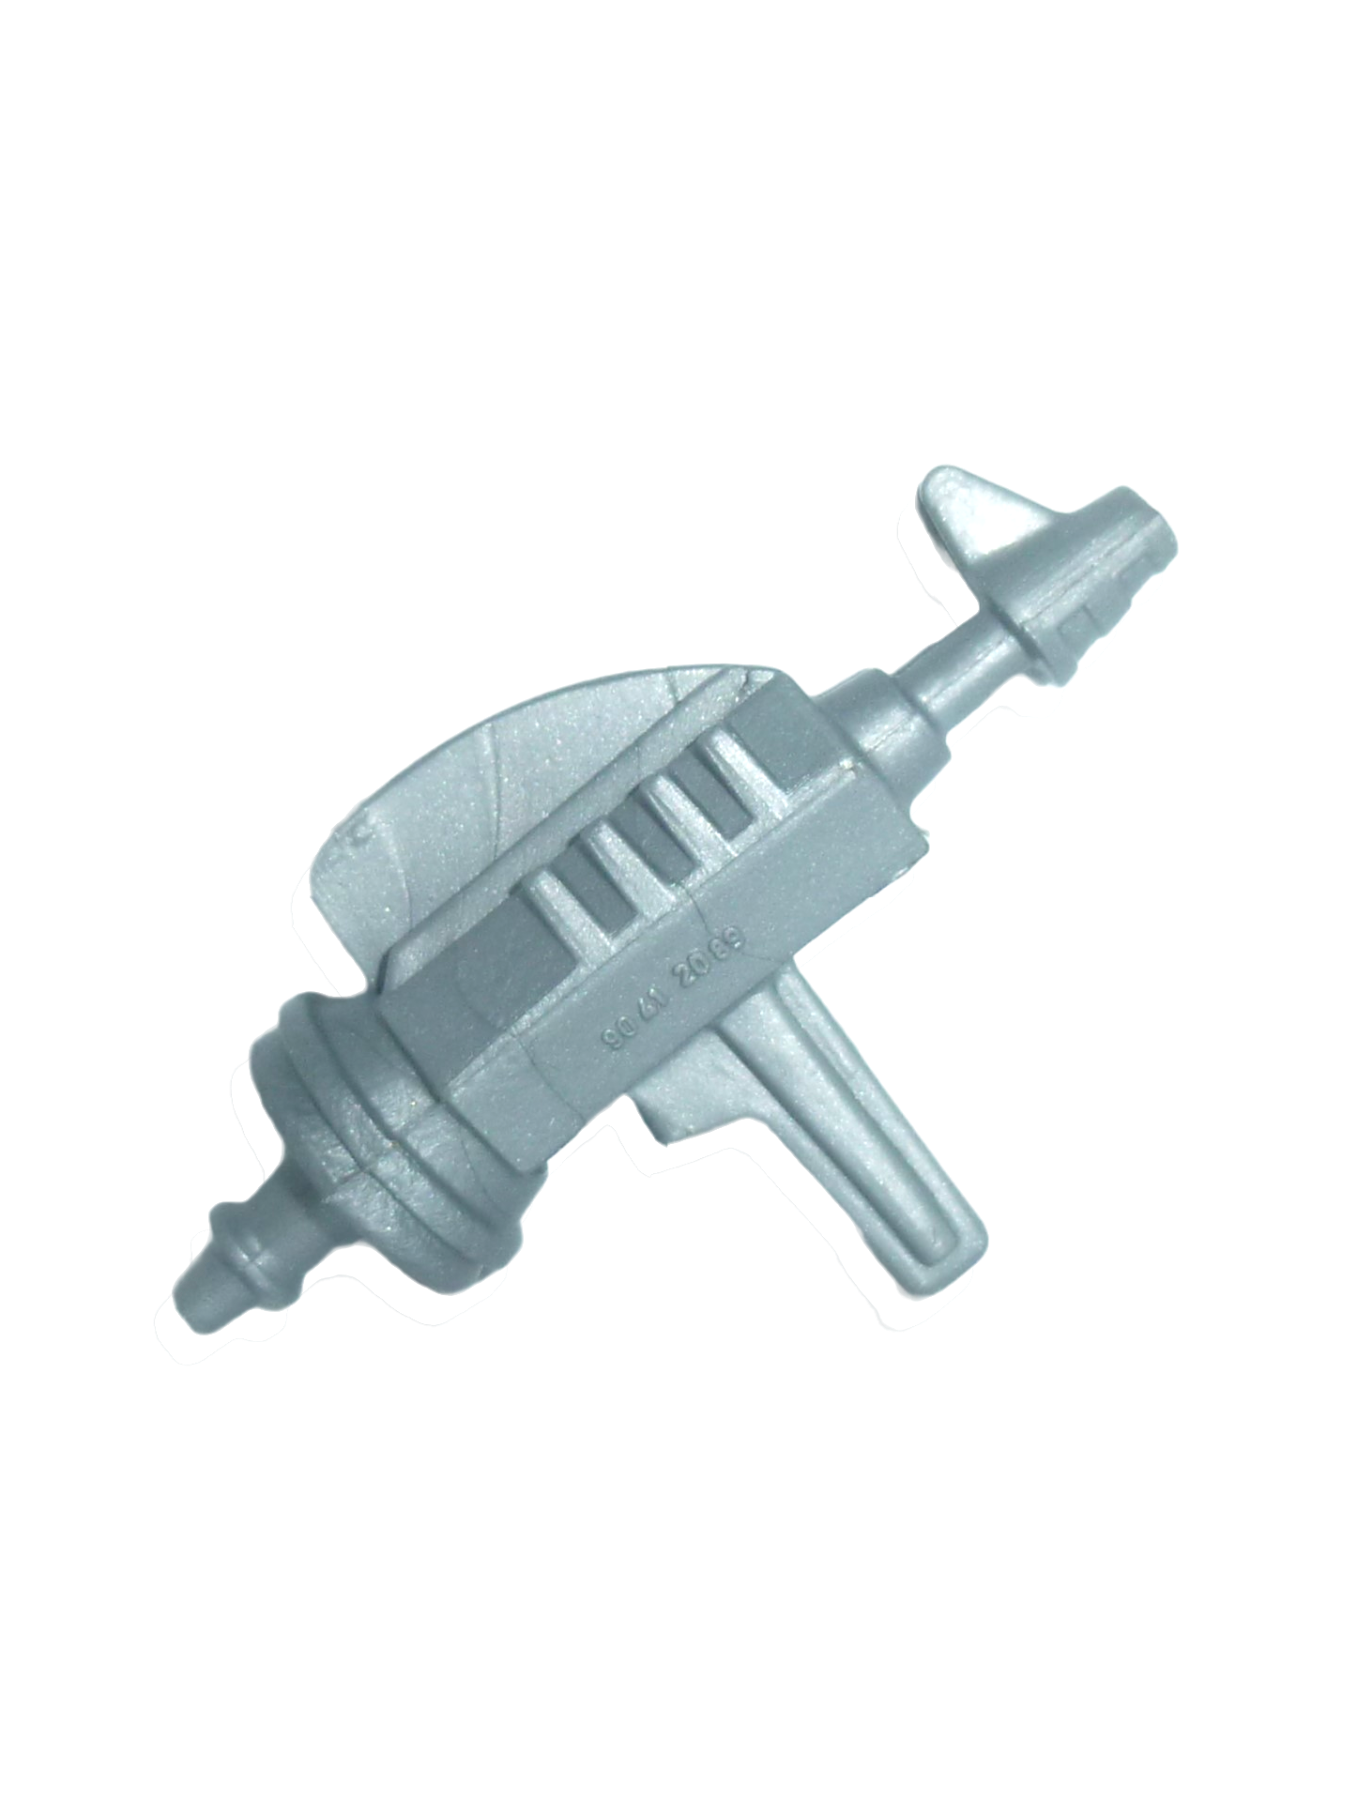 Roboto Blaster / Kanone / Waffe